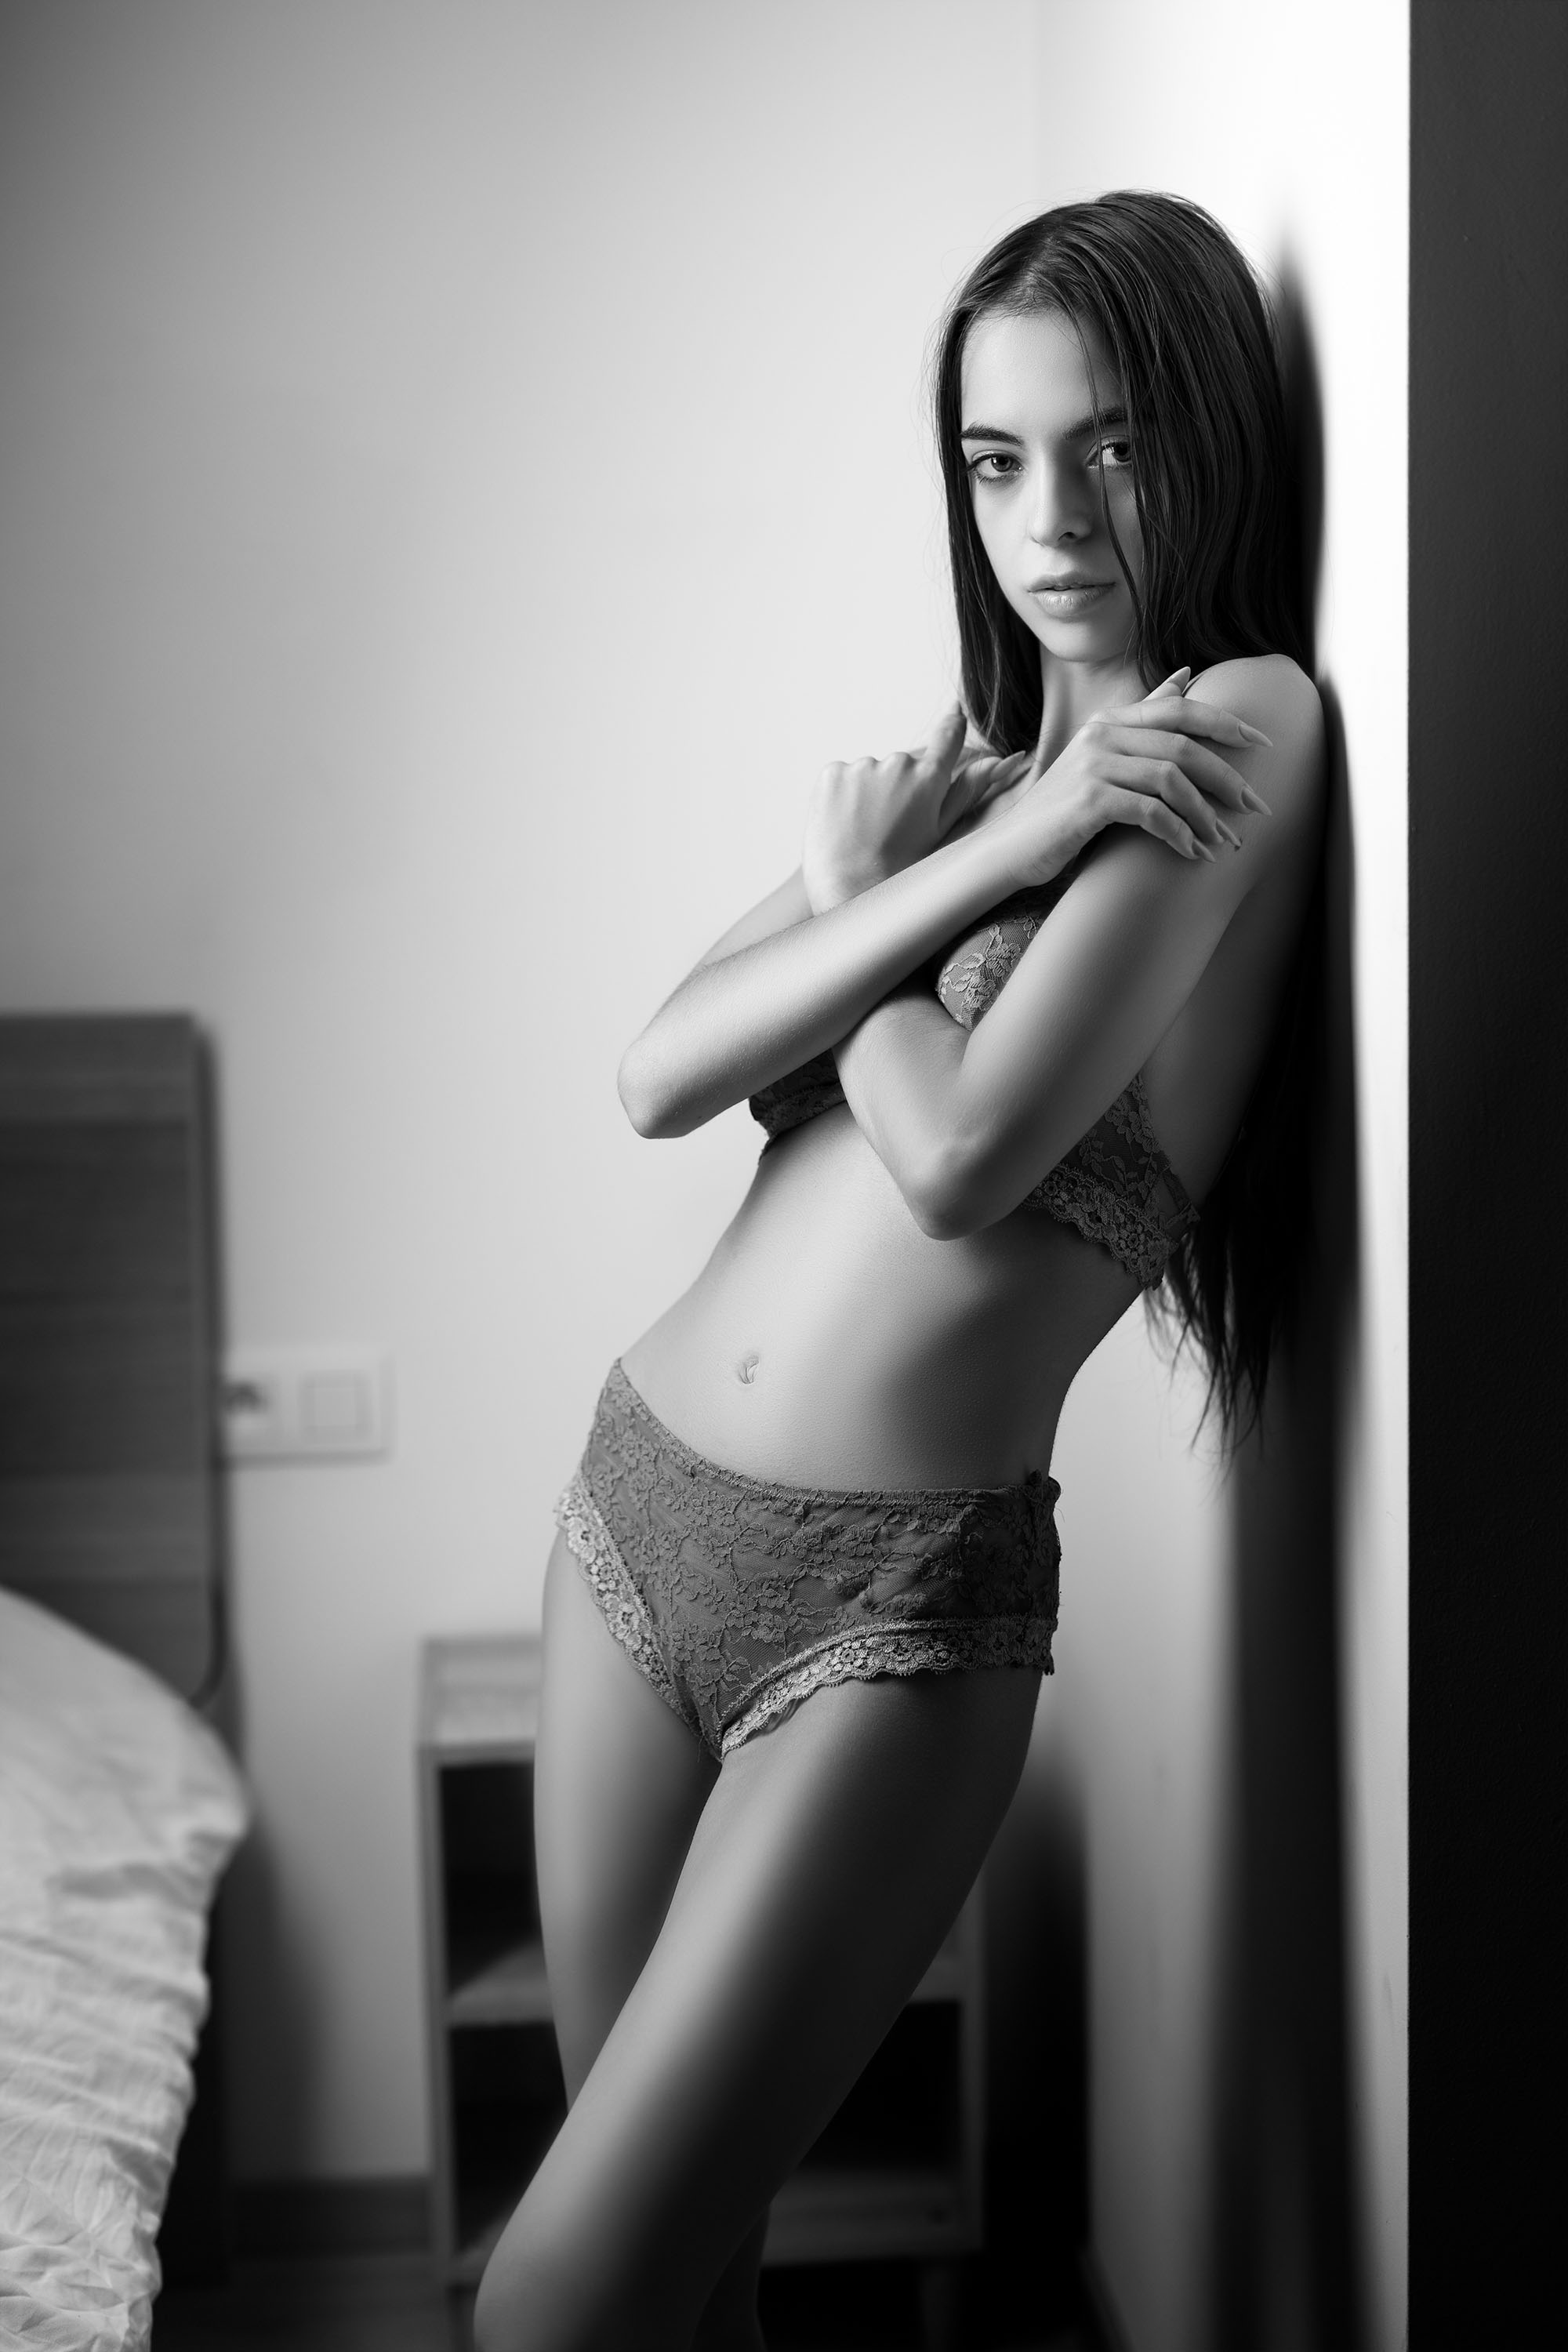 Anastasiia, model from Ukraine at a boudoir photoshoot